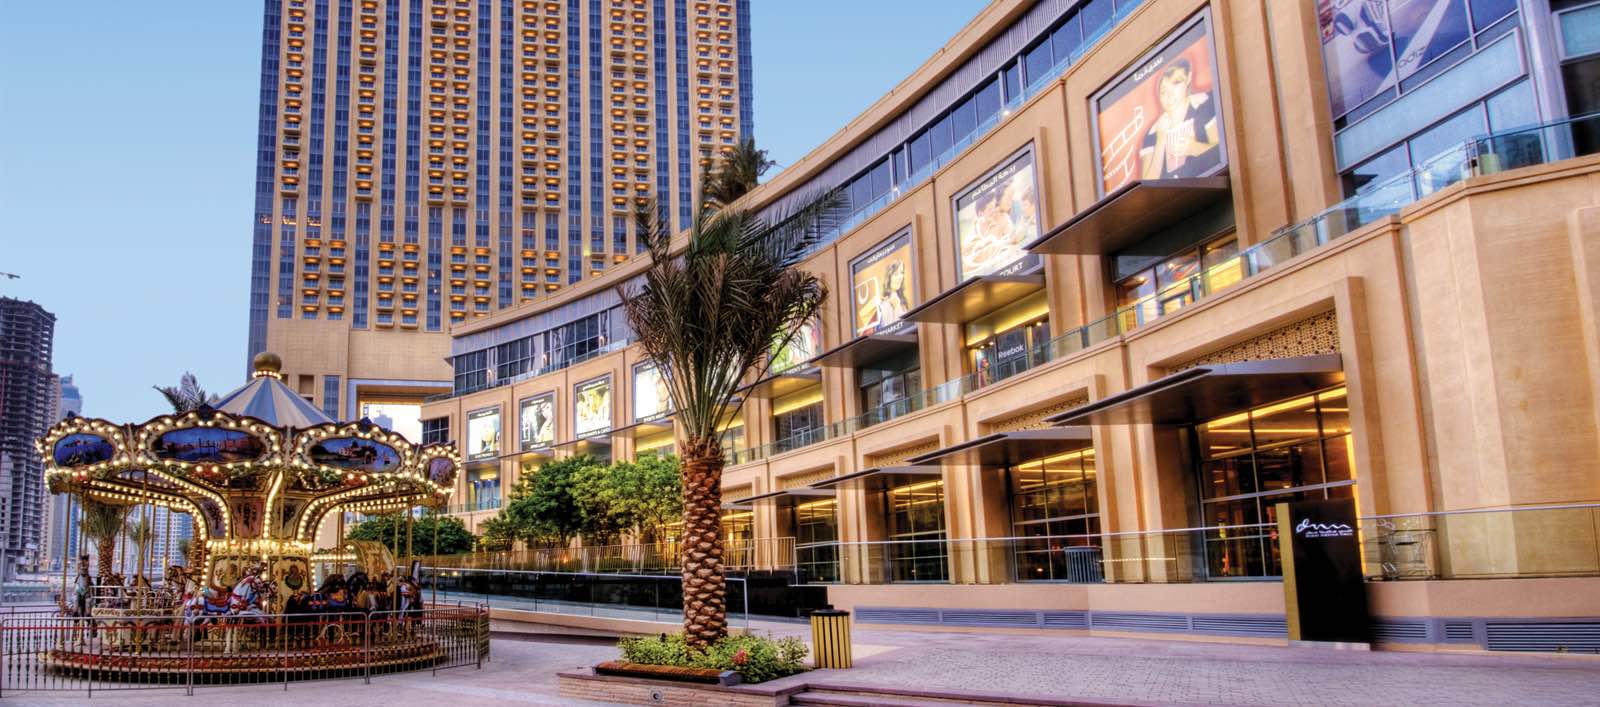 Dubai-Marina-Mall